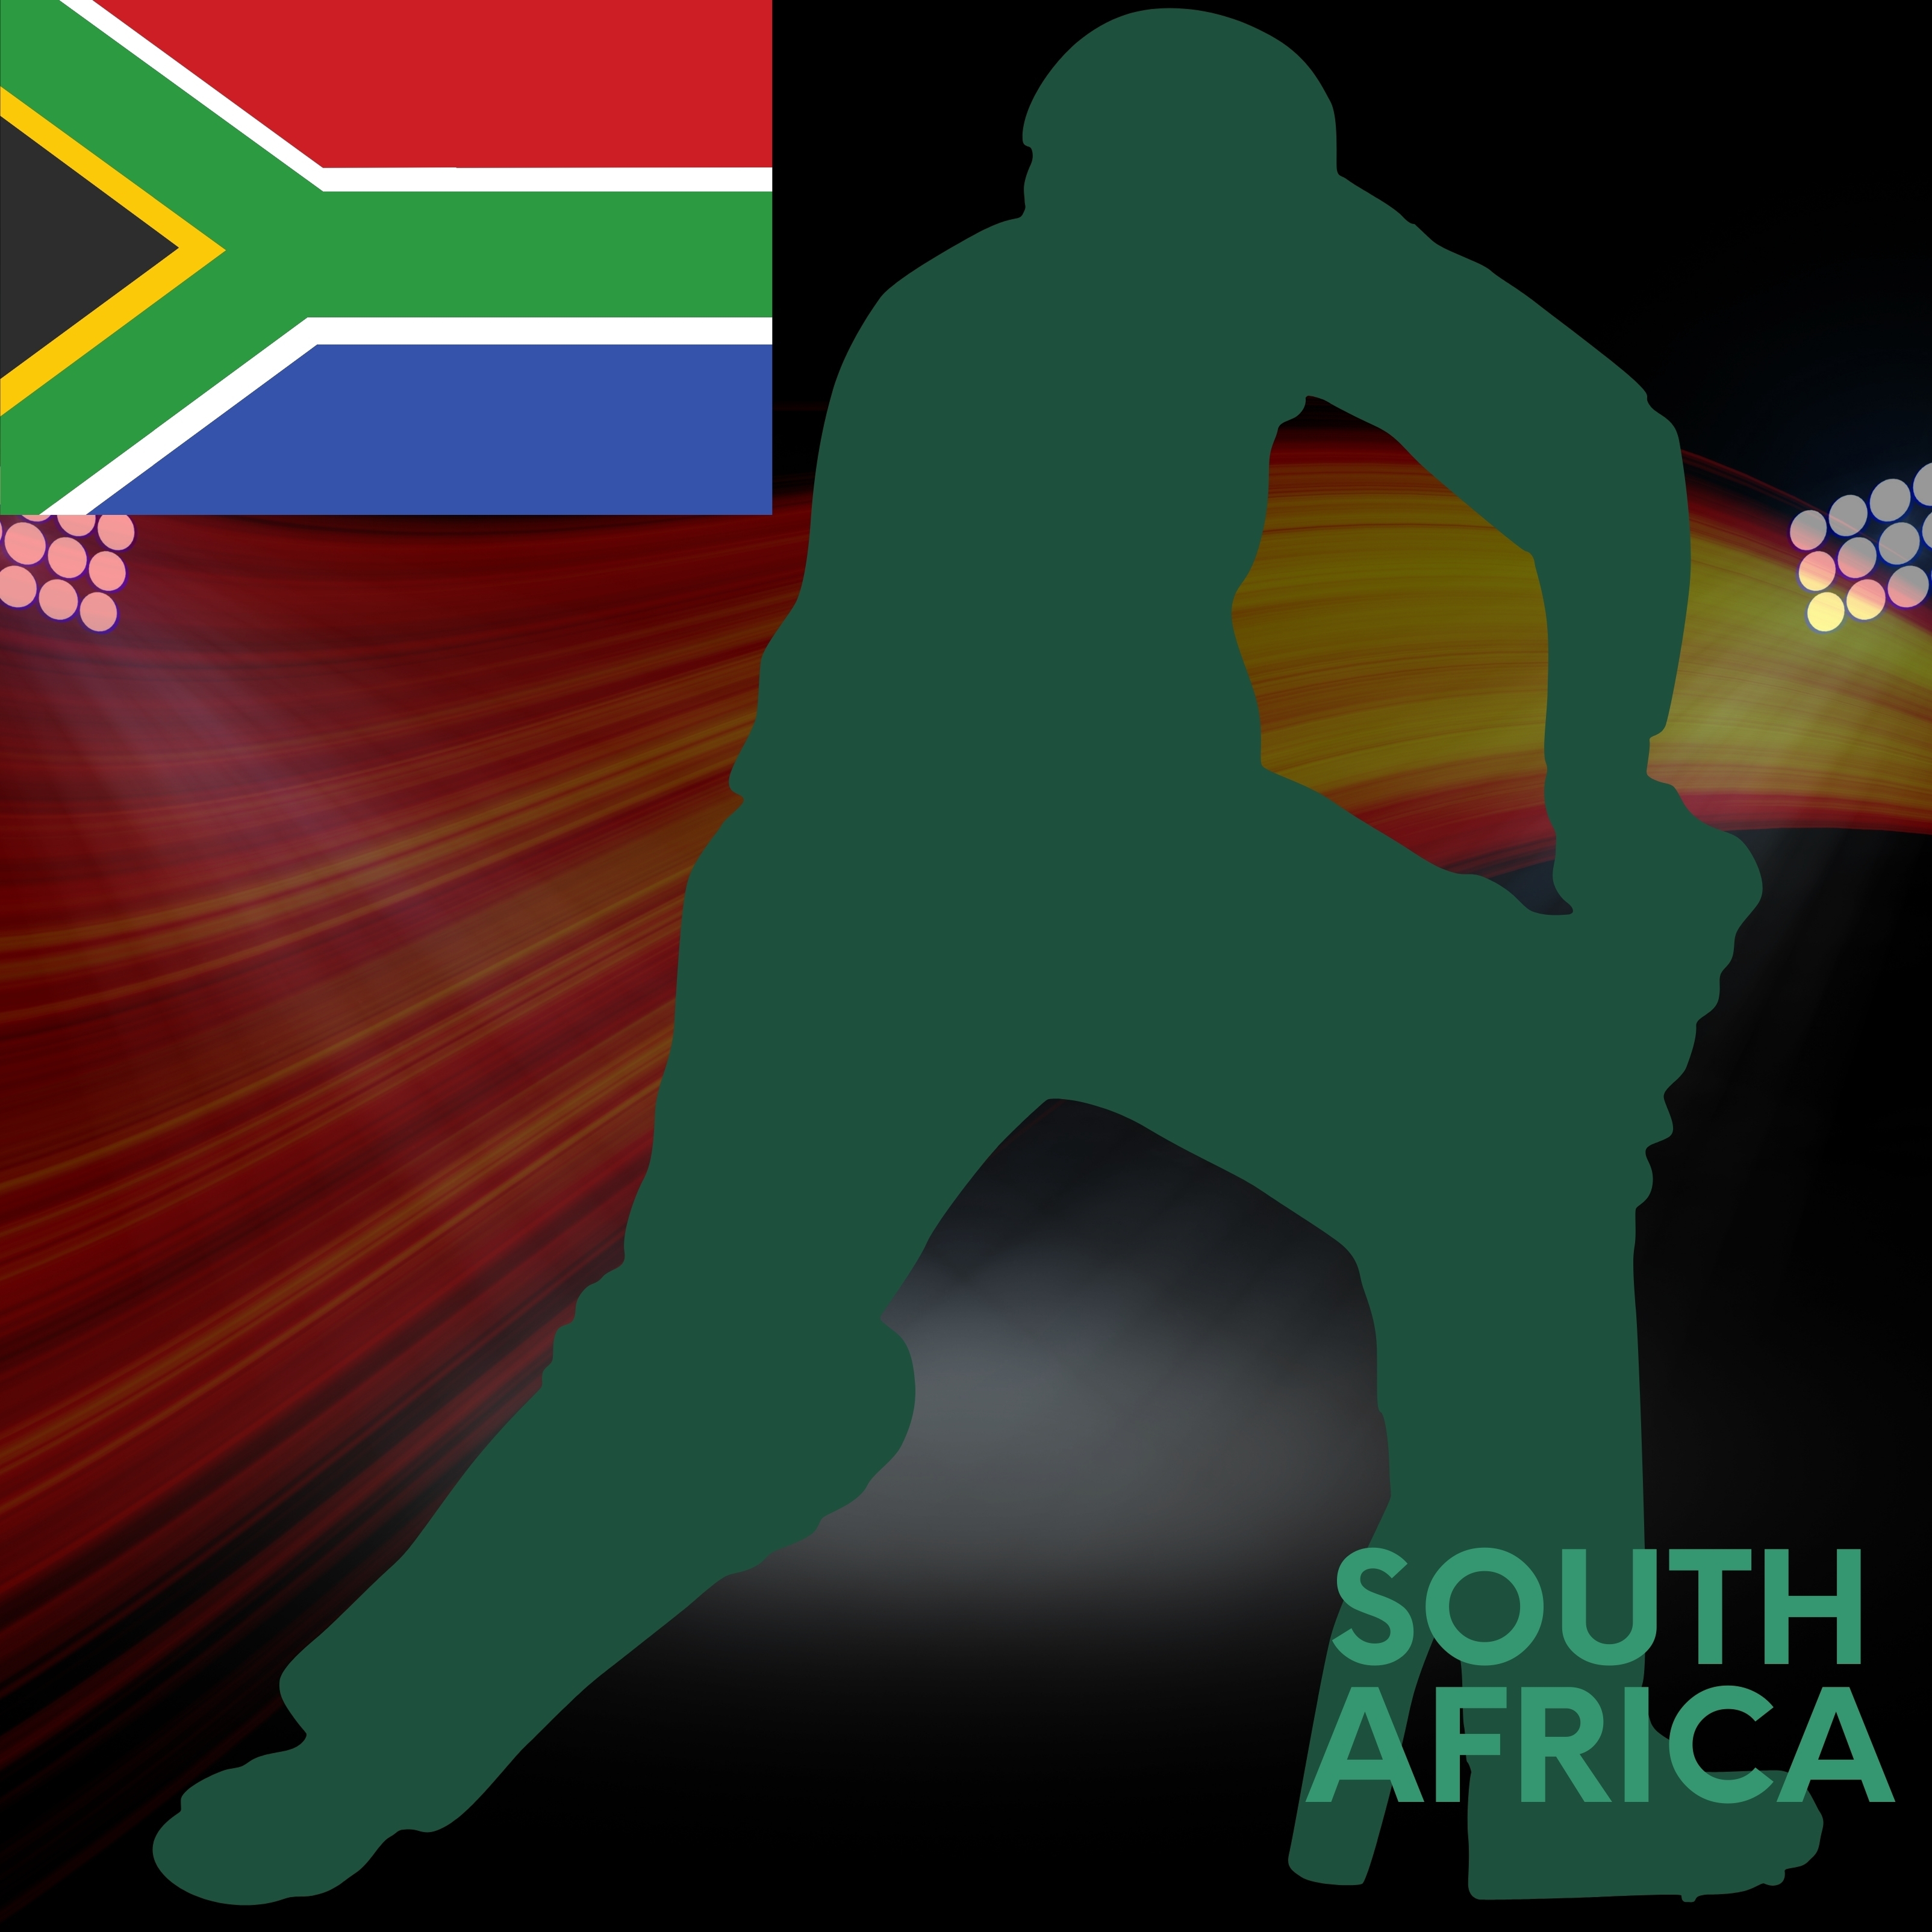 iPad Wallpapers South Africa Cricket Stadium iPad Wallpaper 3208x3208 px